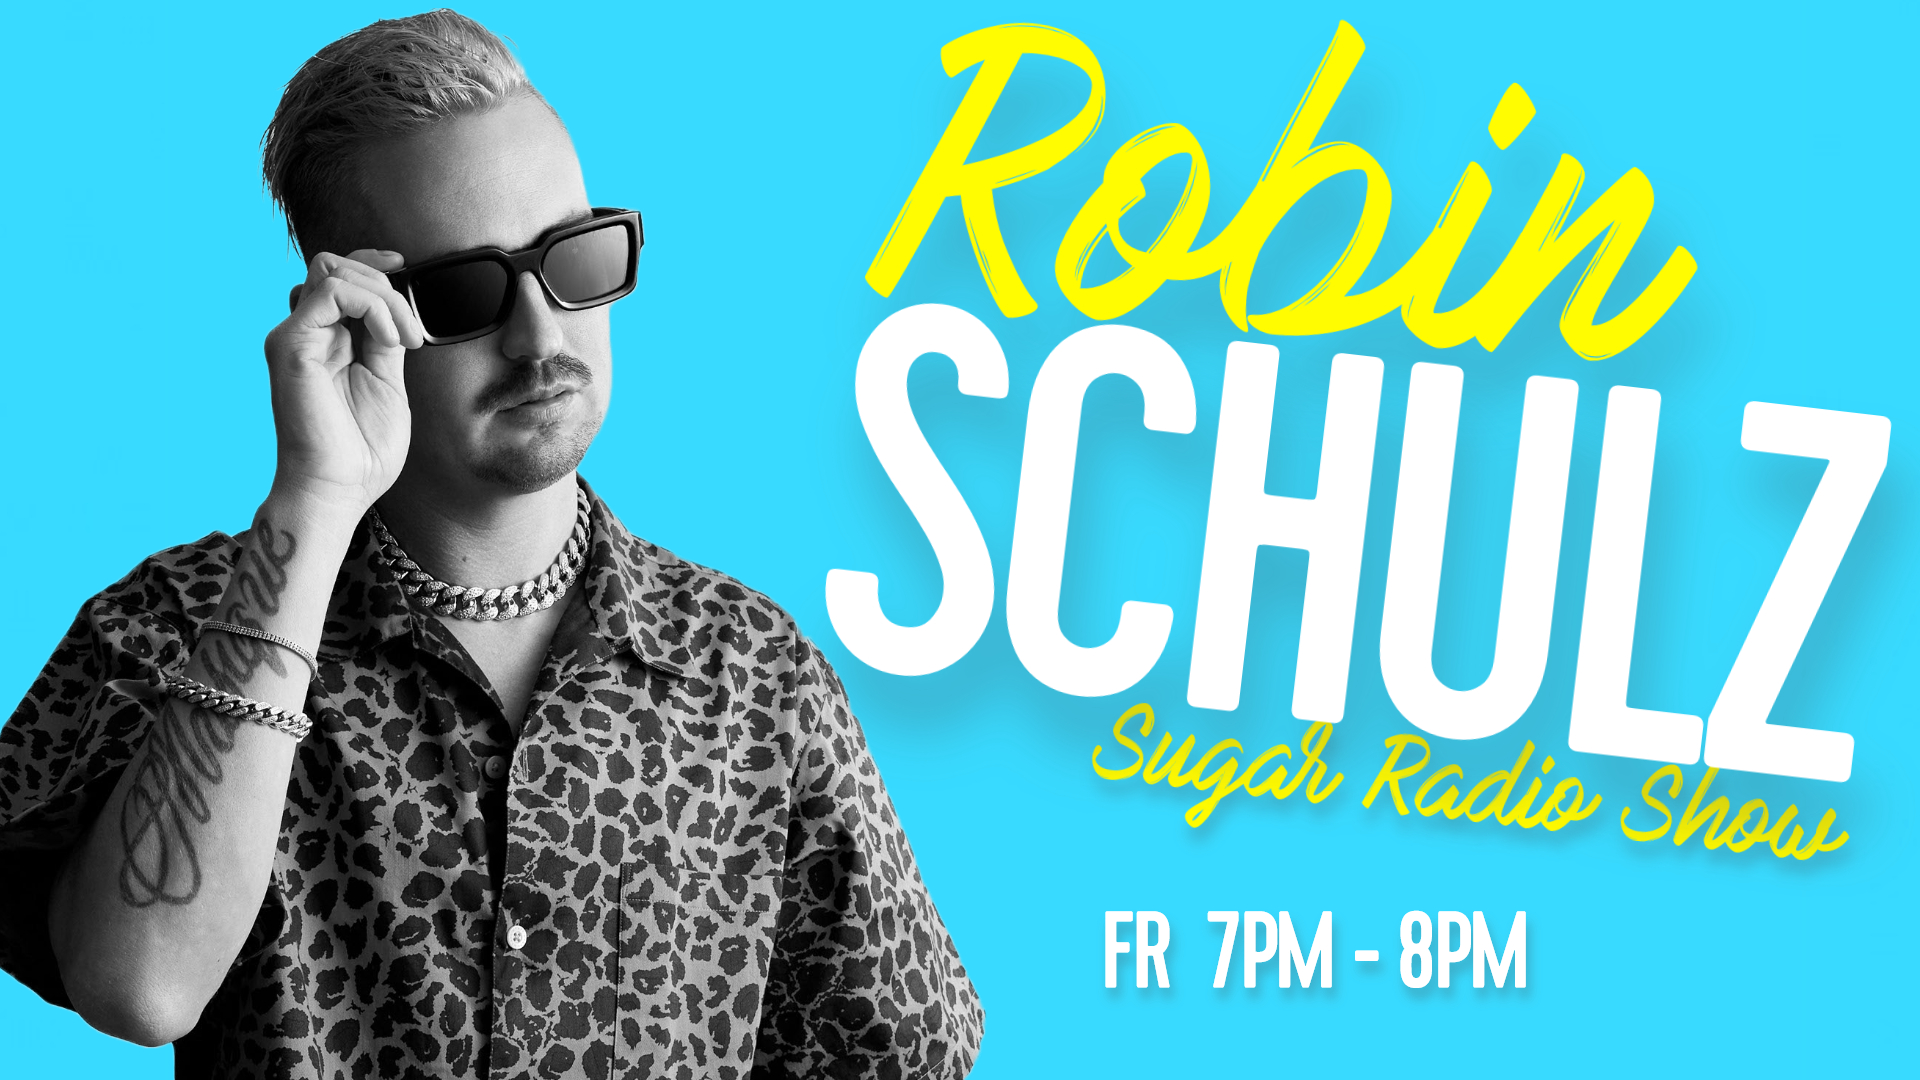 Robin Schulz: Sugar Radio Show!